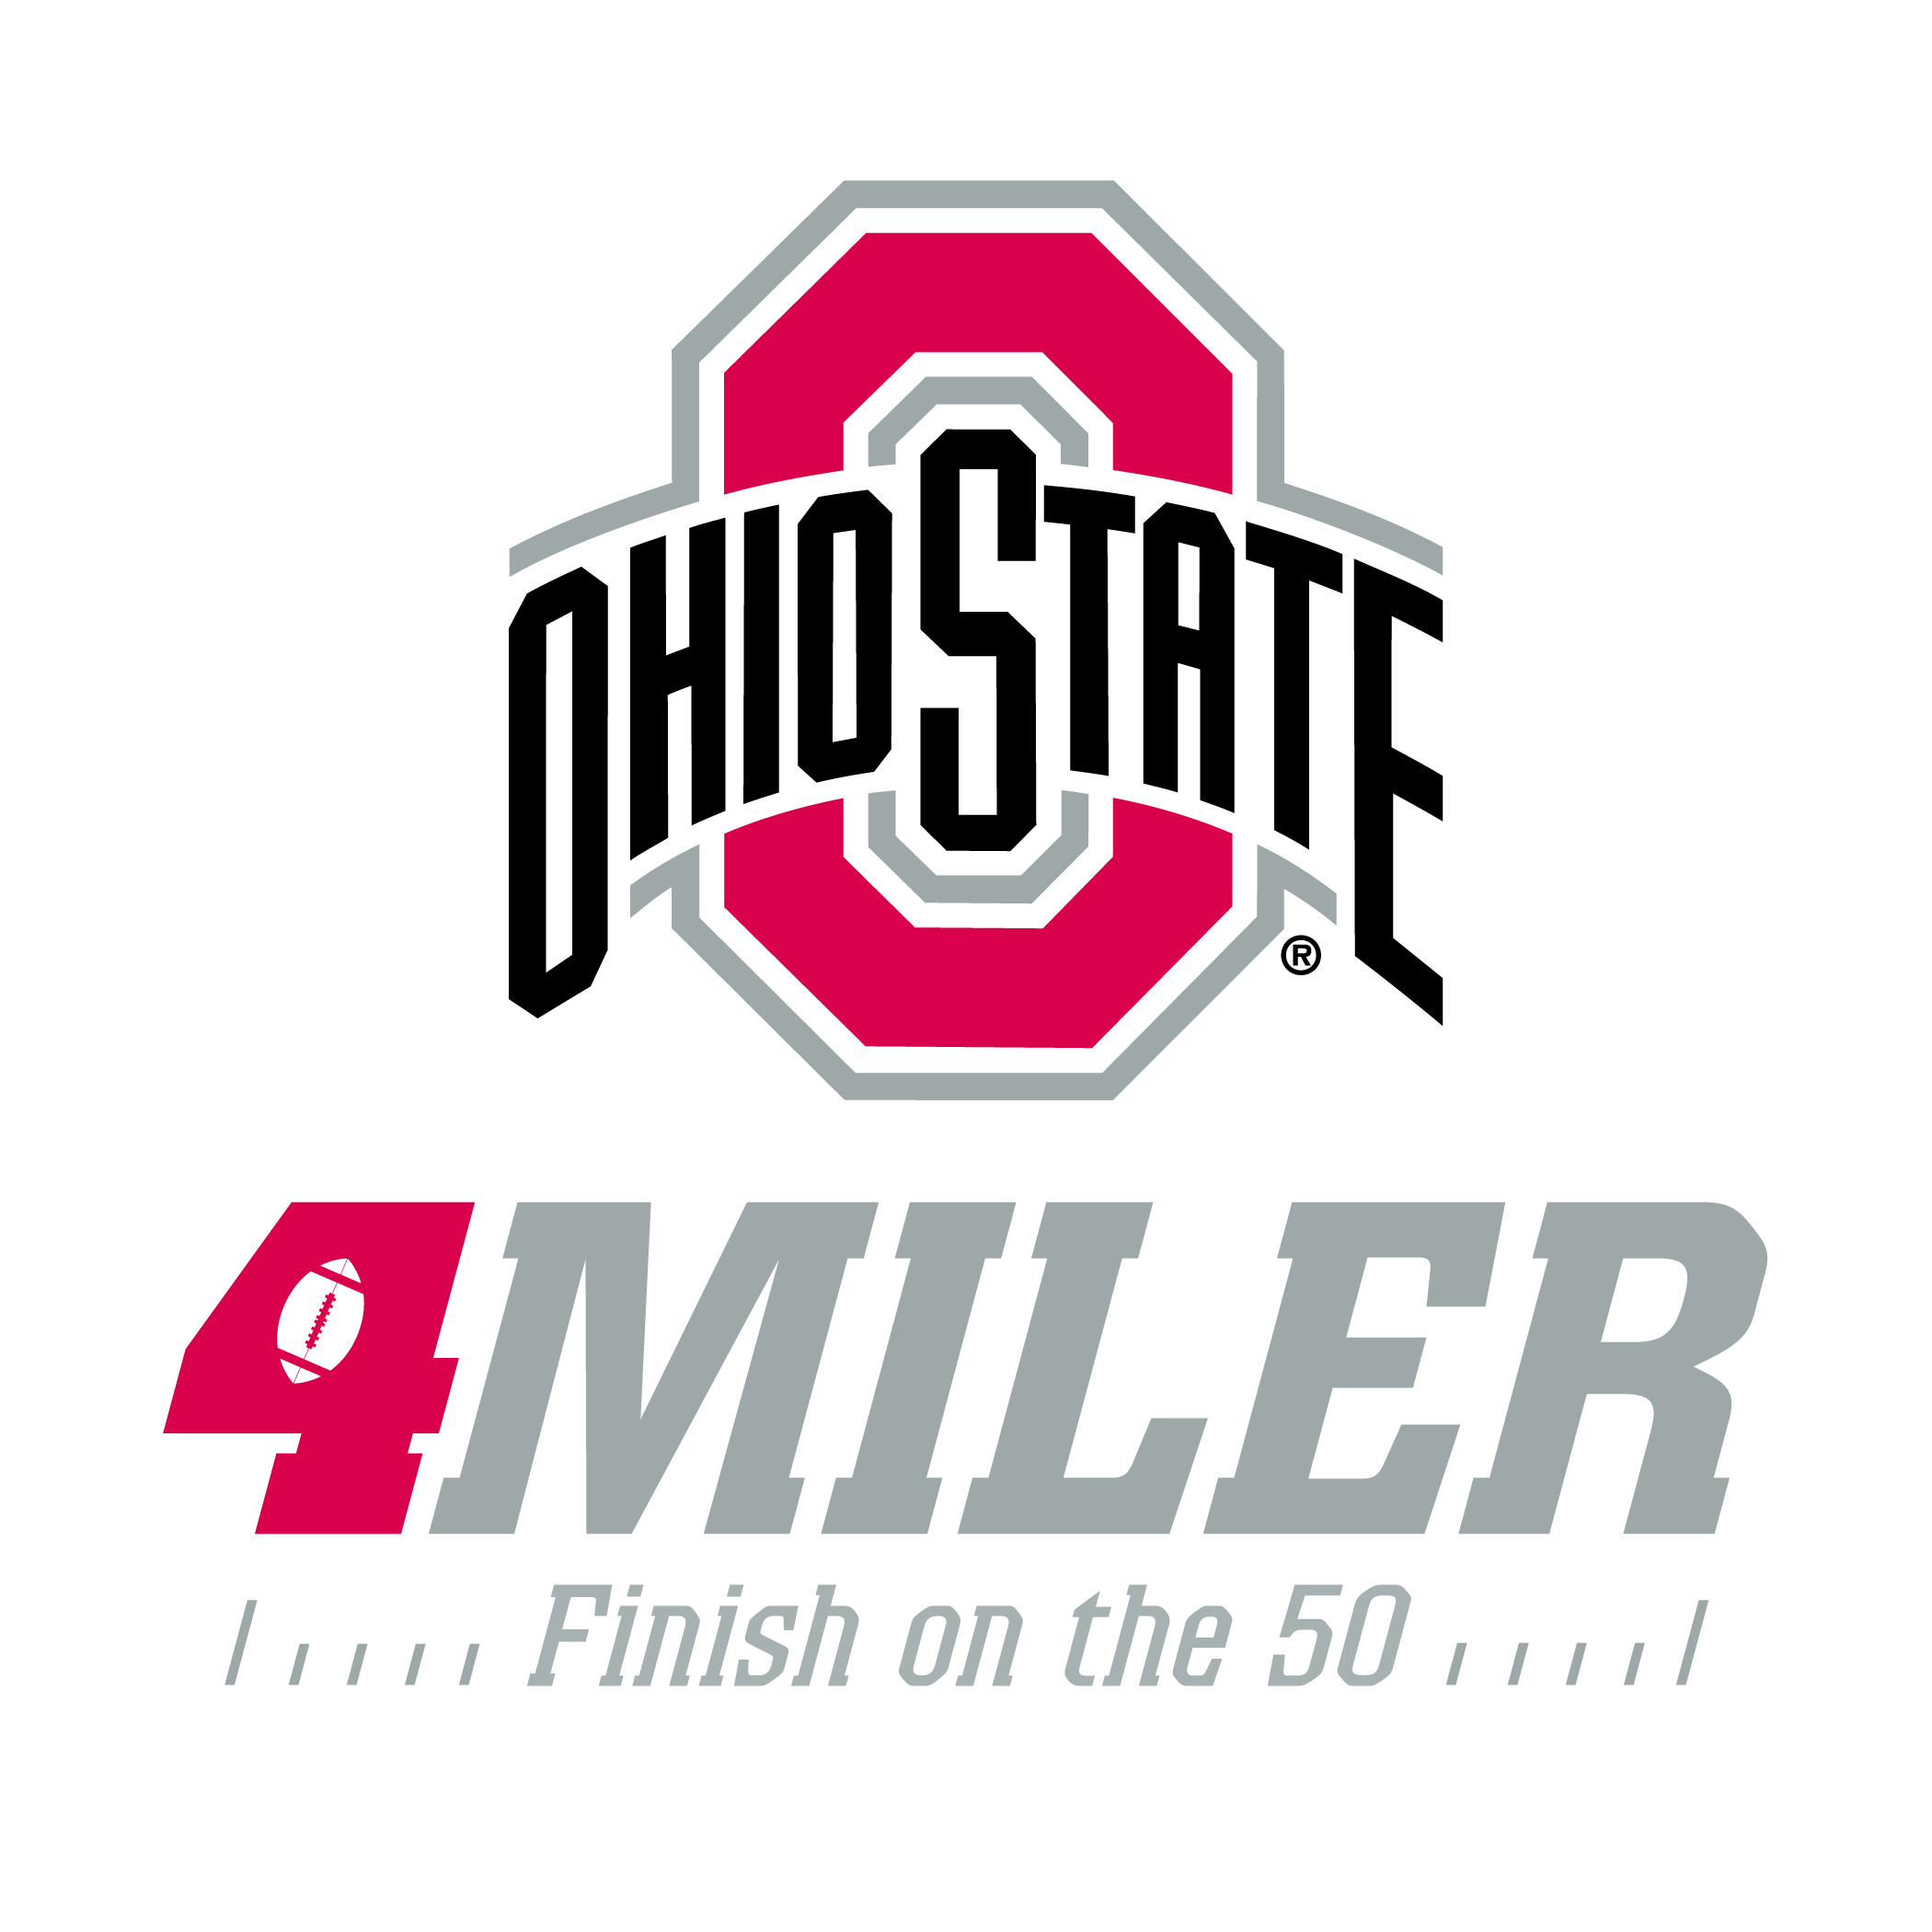 The Ohio State 4 Miler